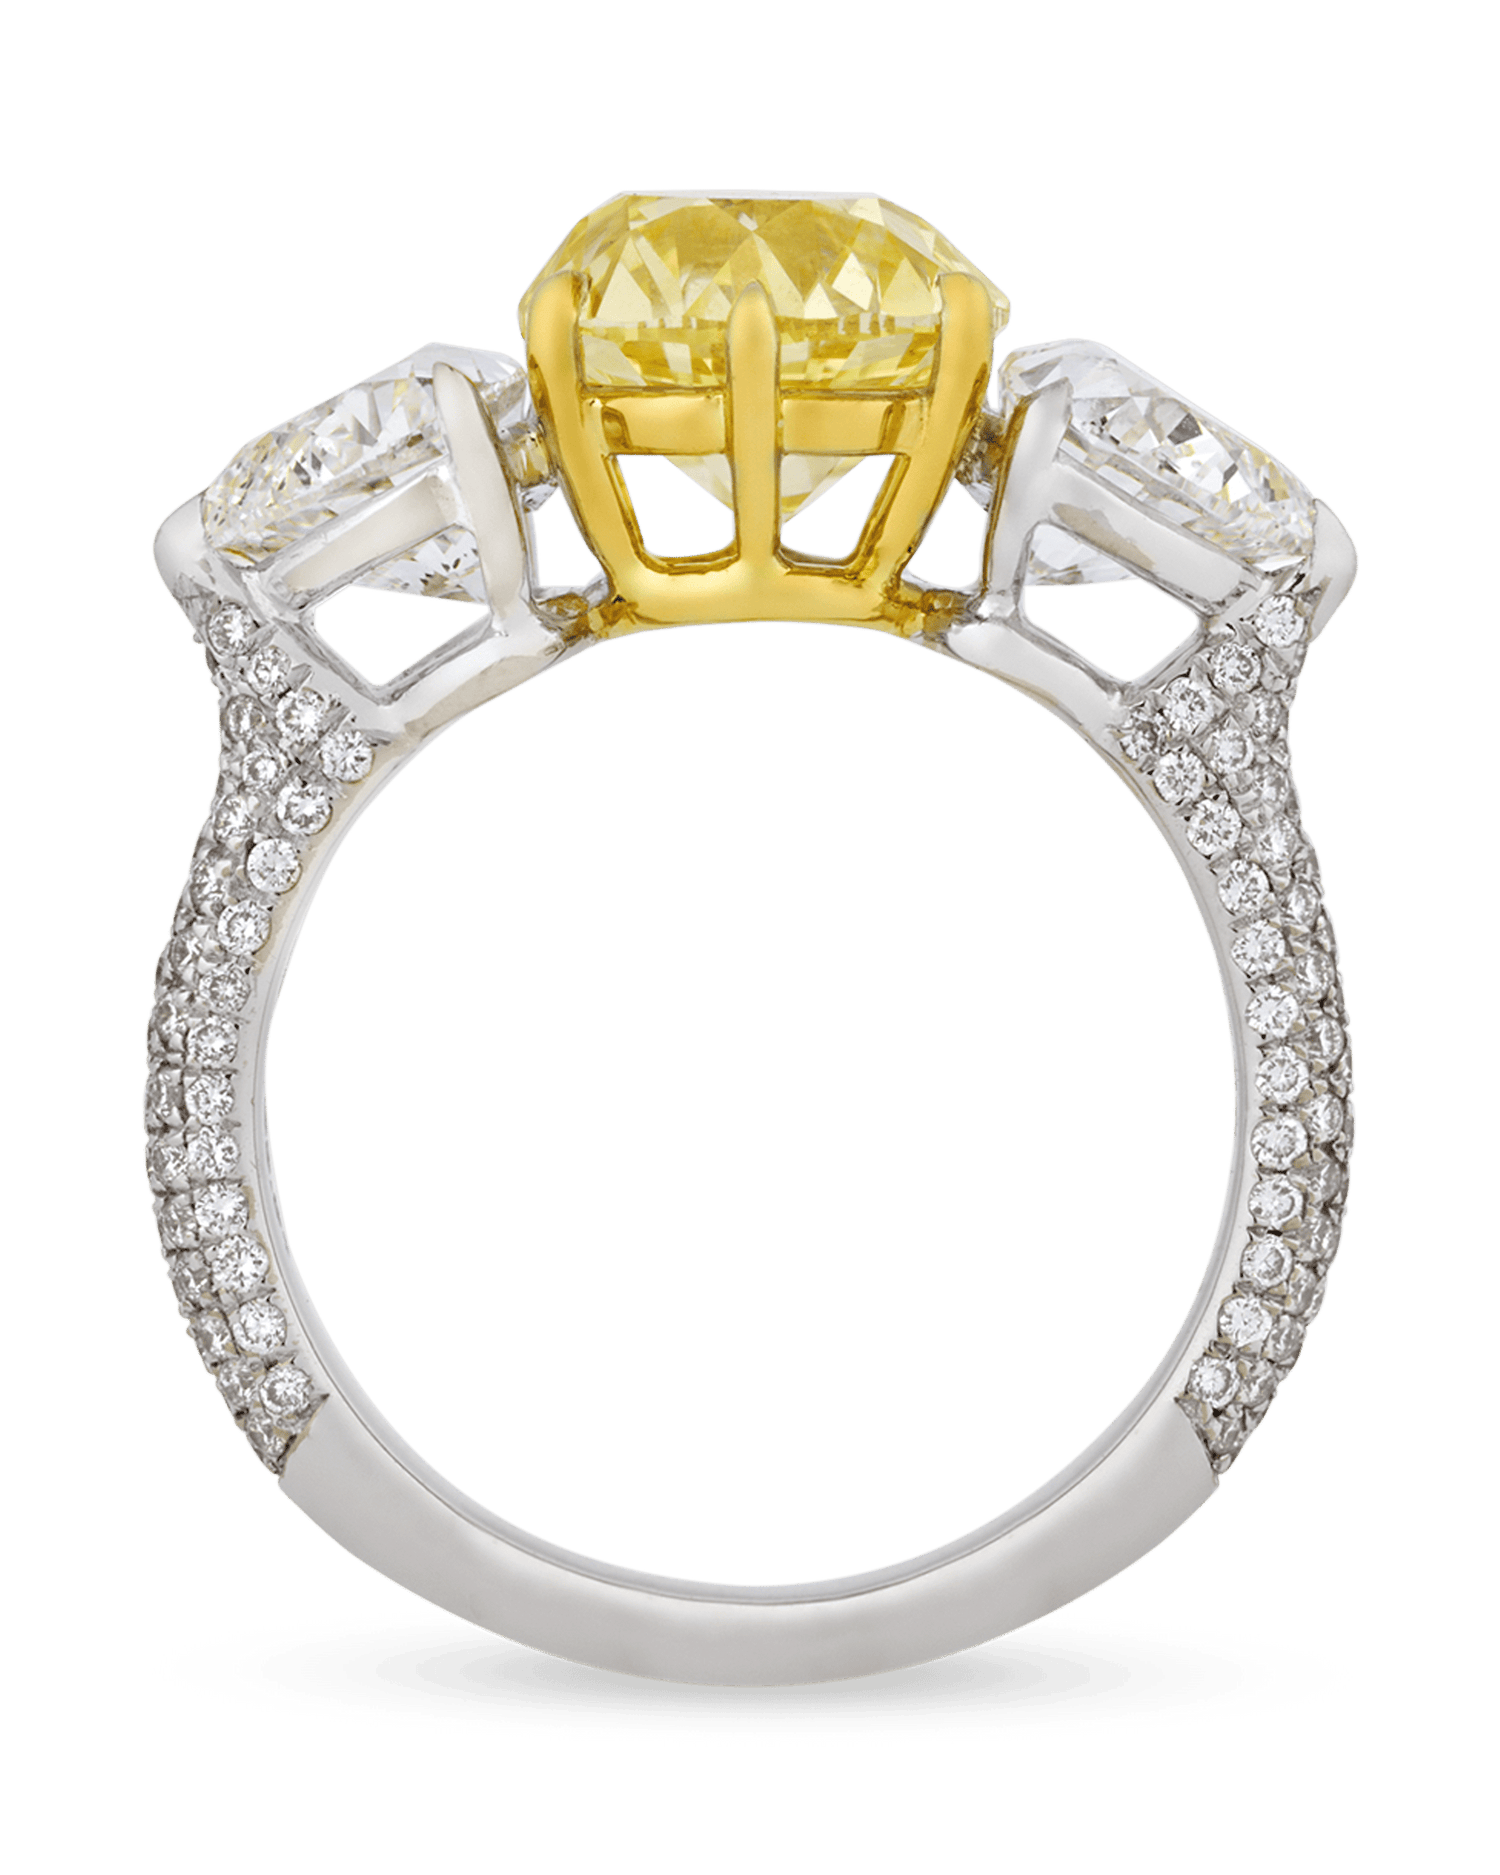 Fancy Intense Yellow Diamond Ring, 2.59 Carats